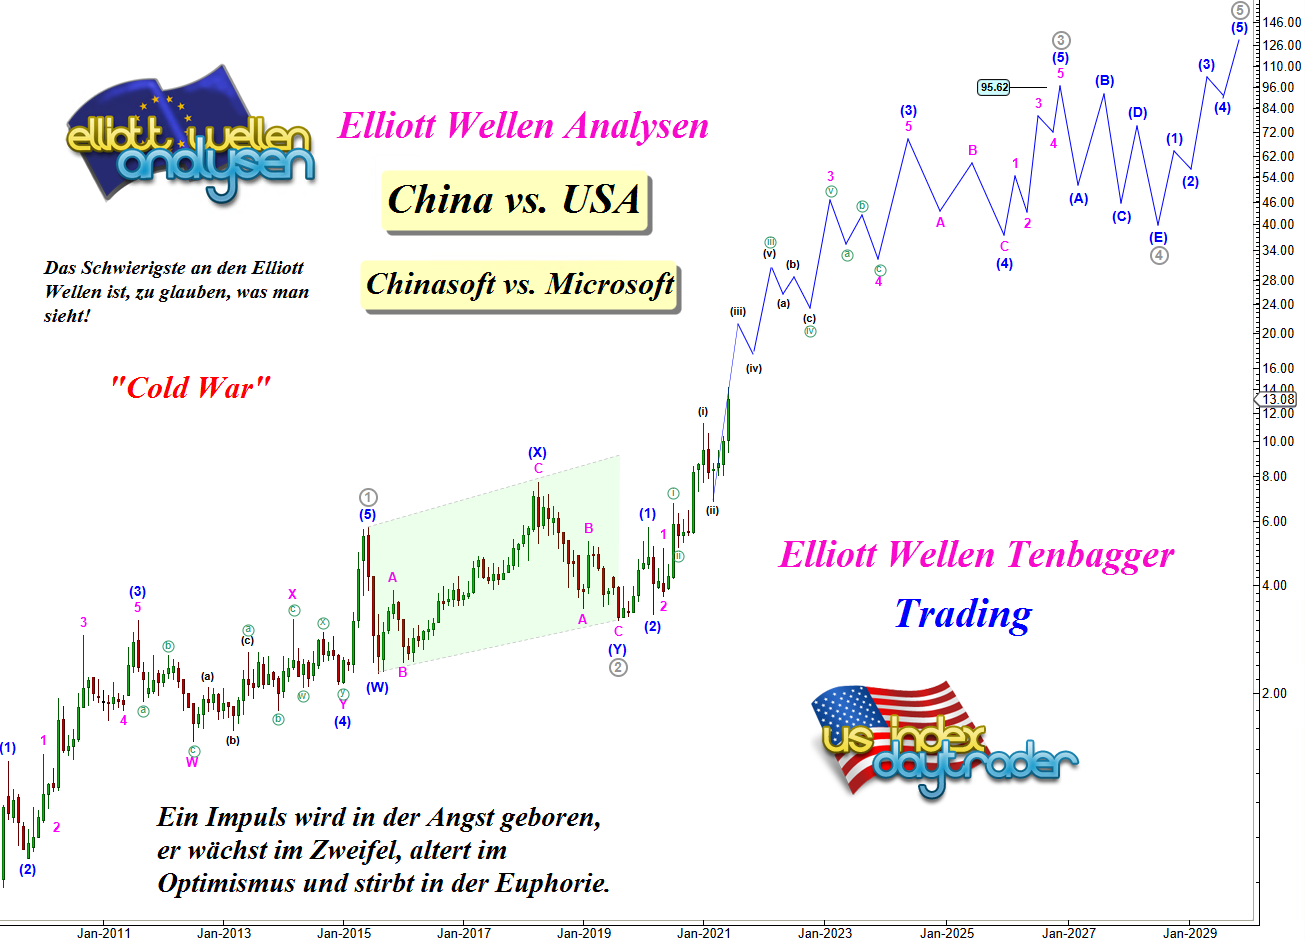 EW-Analysis-China-vs-USA-Chinasoft-vs-Microsoft-100-André-Tiedje-GodmodeTrader.de-1